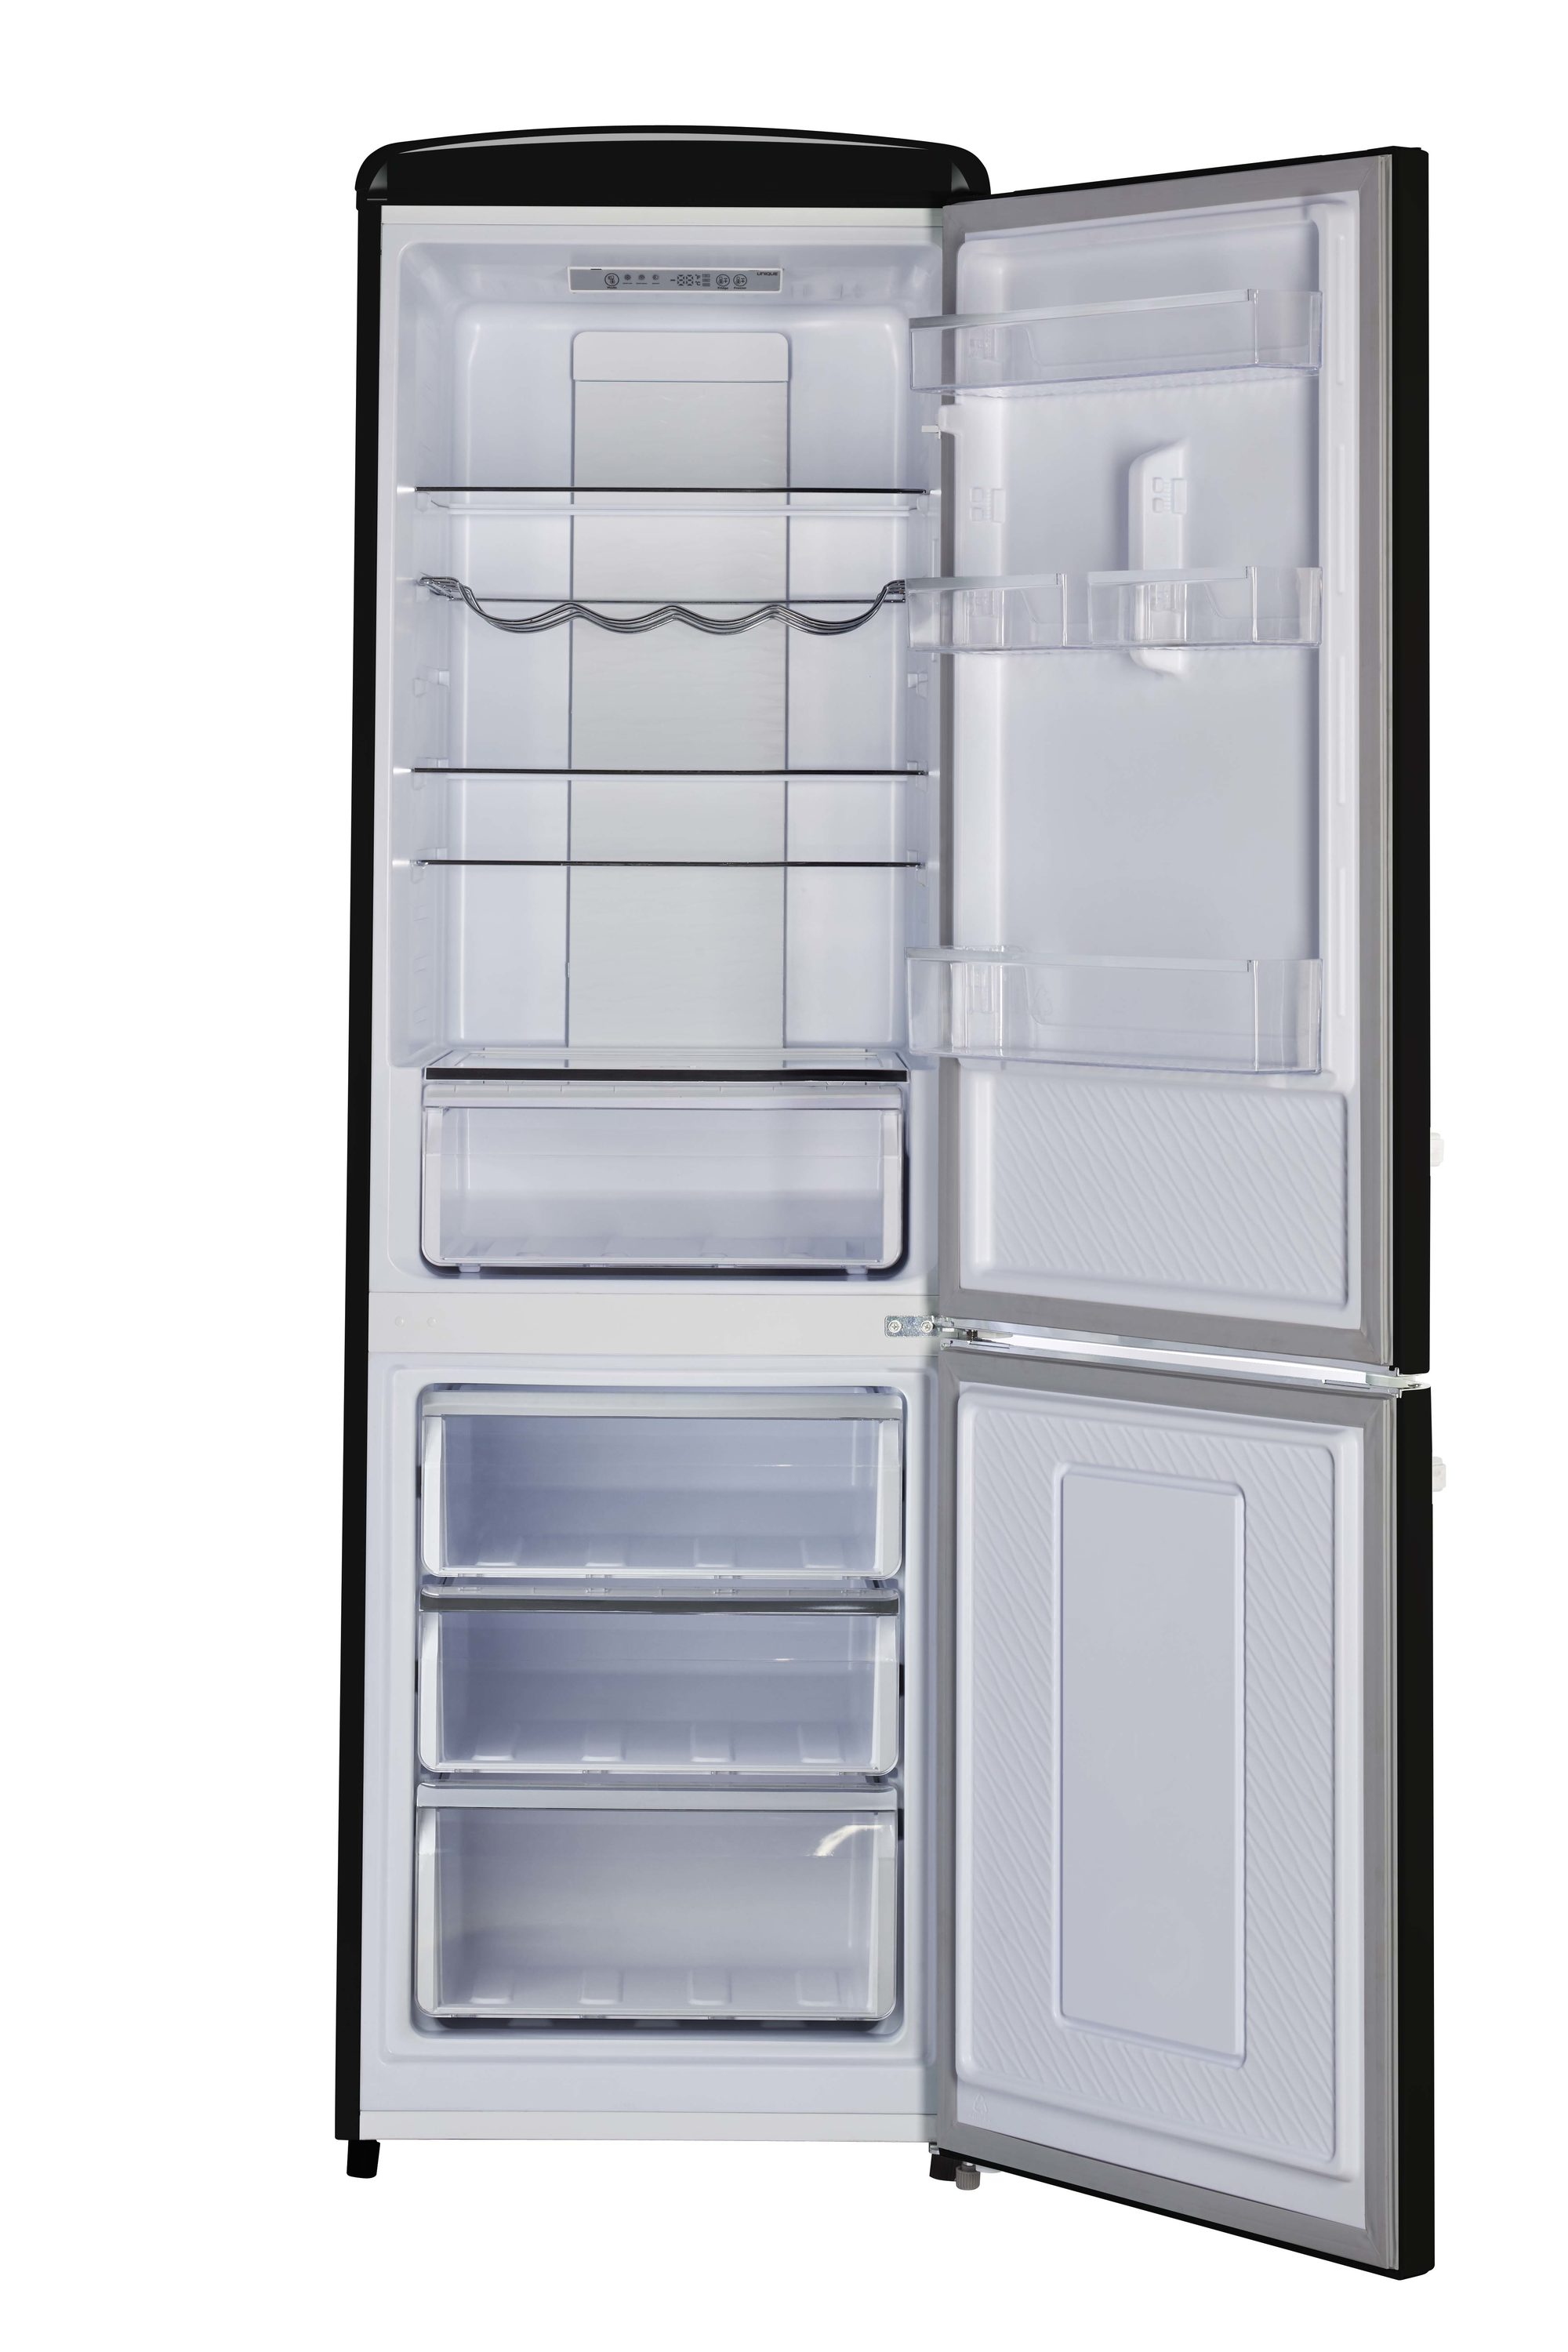 Unique Appliances Classic Retro 23.6 in 11.7 Cu. ft. Frost Free Retro Bottom Freezer Refrigerator in Marshmallow White, Energy Star